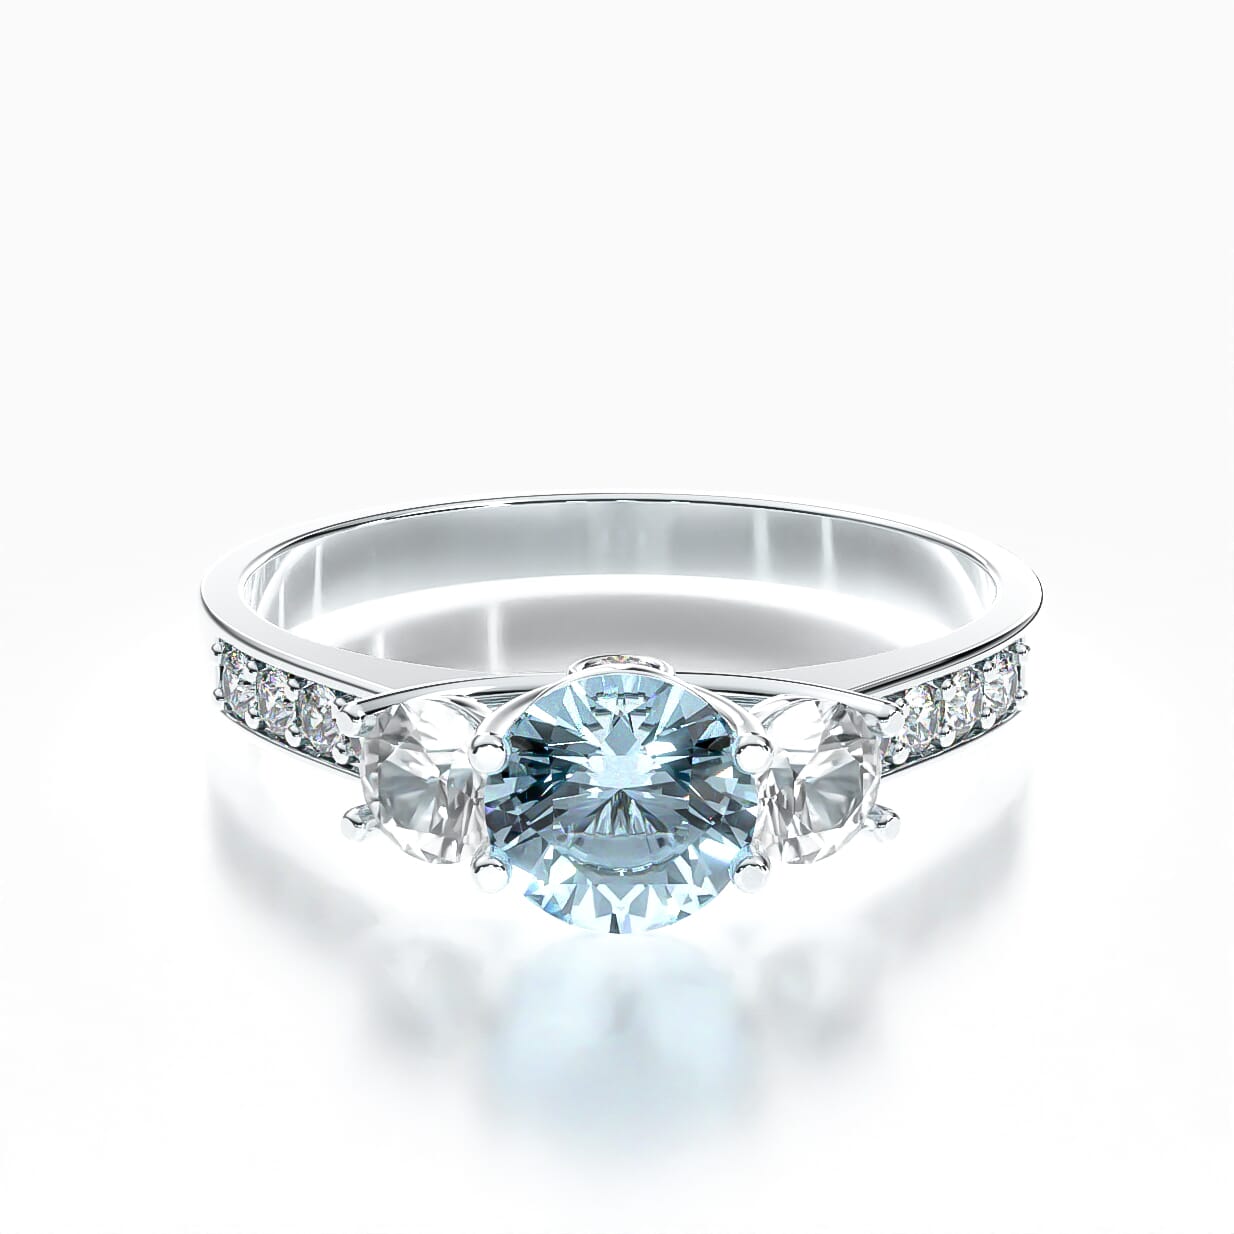 Dream engagement ring: white gold, aquamarine